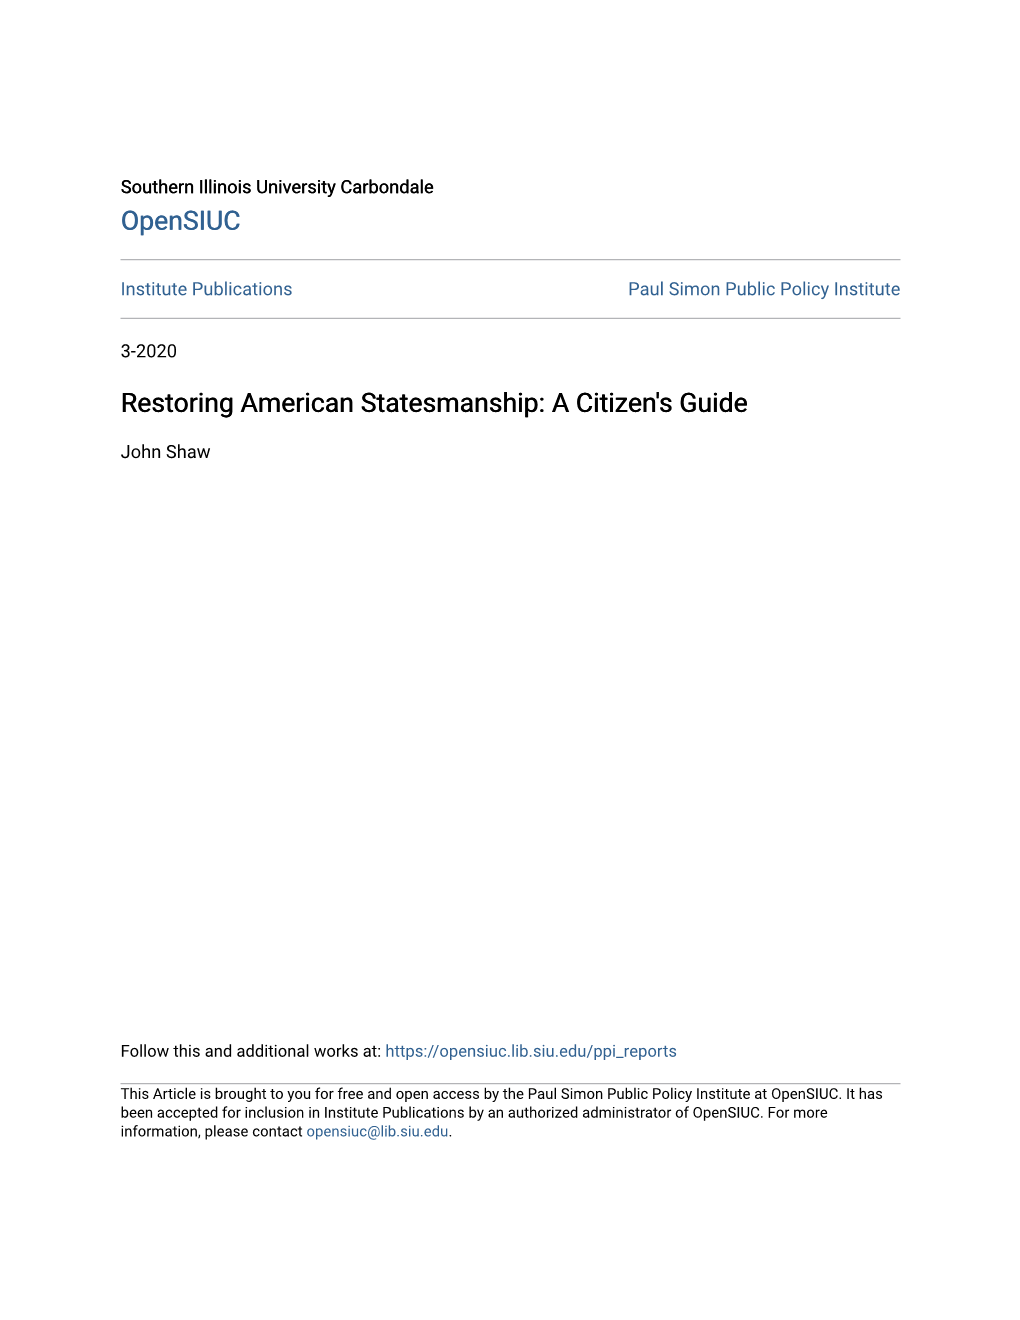 Restoring American Statesmanship: a Citizen's Guide